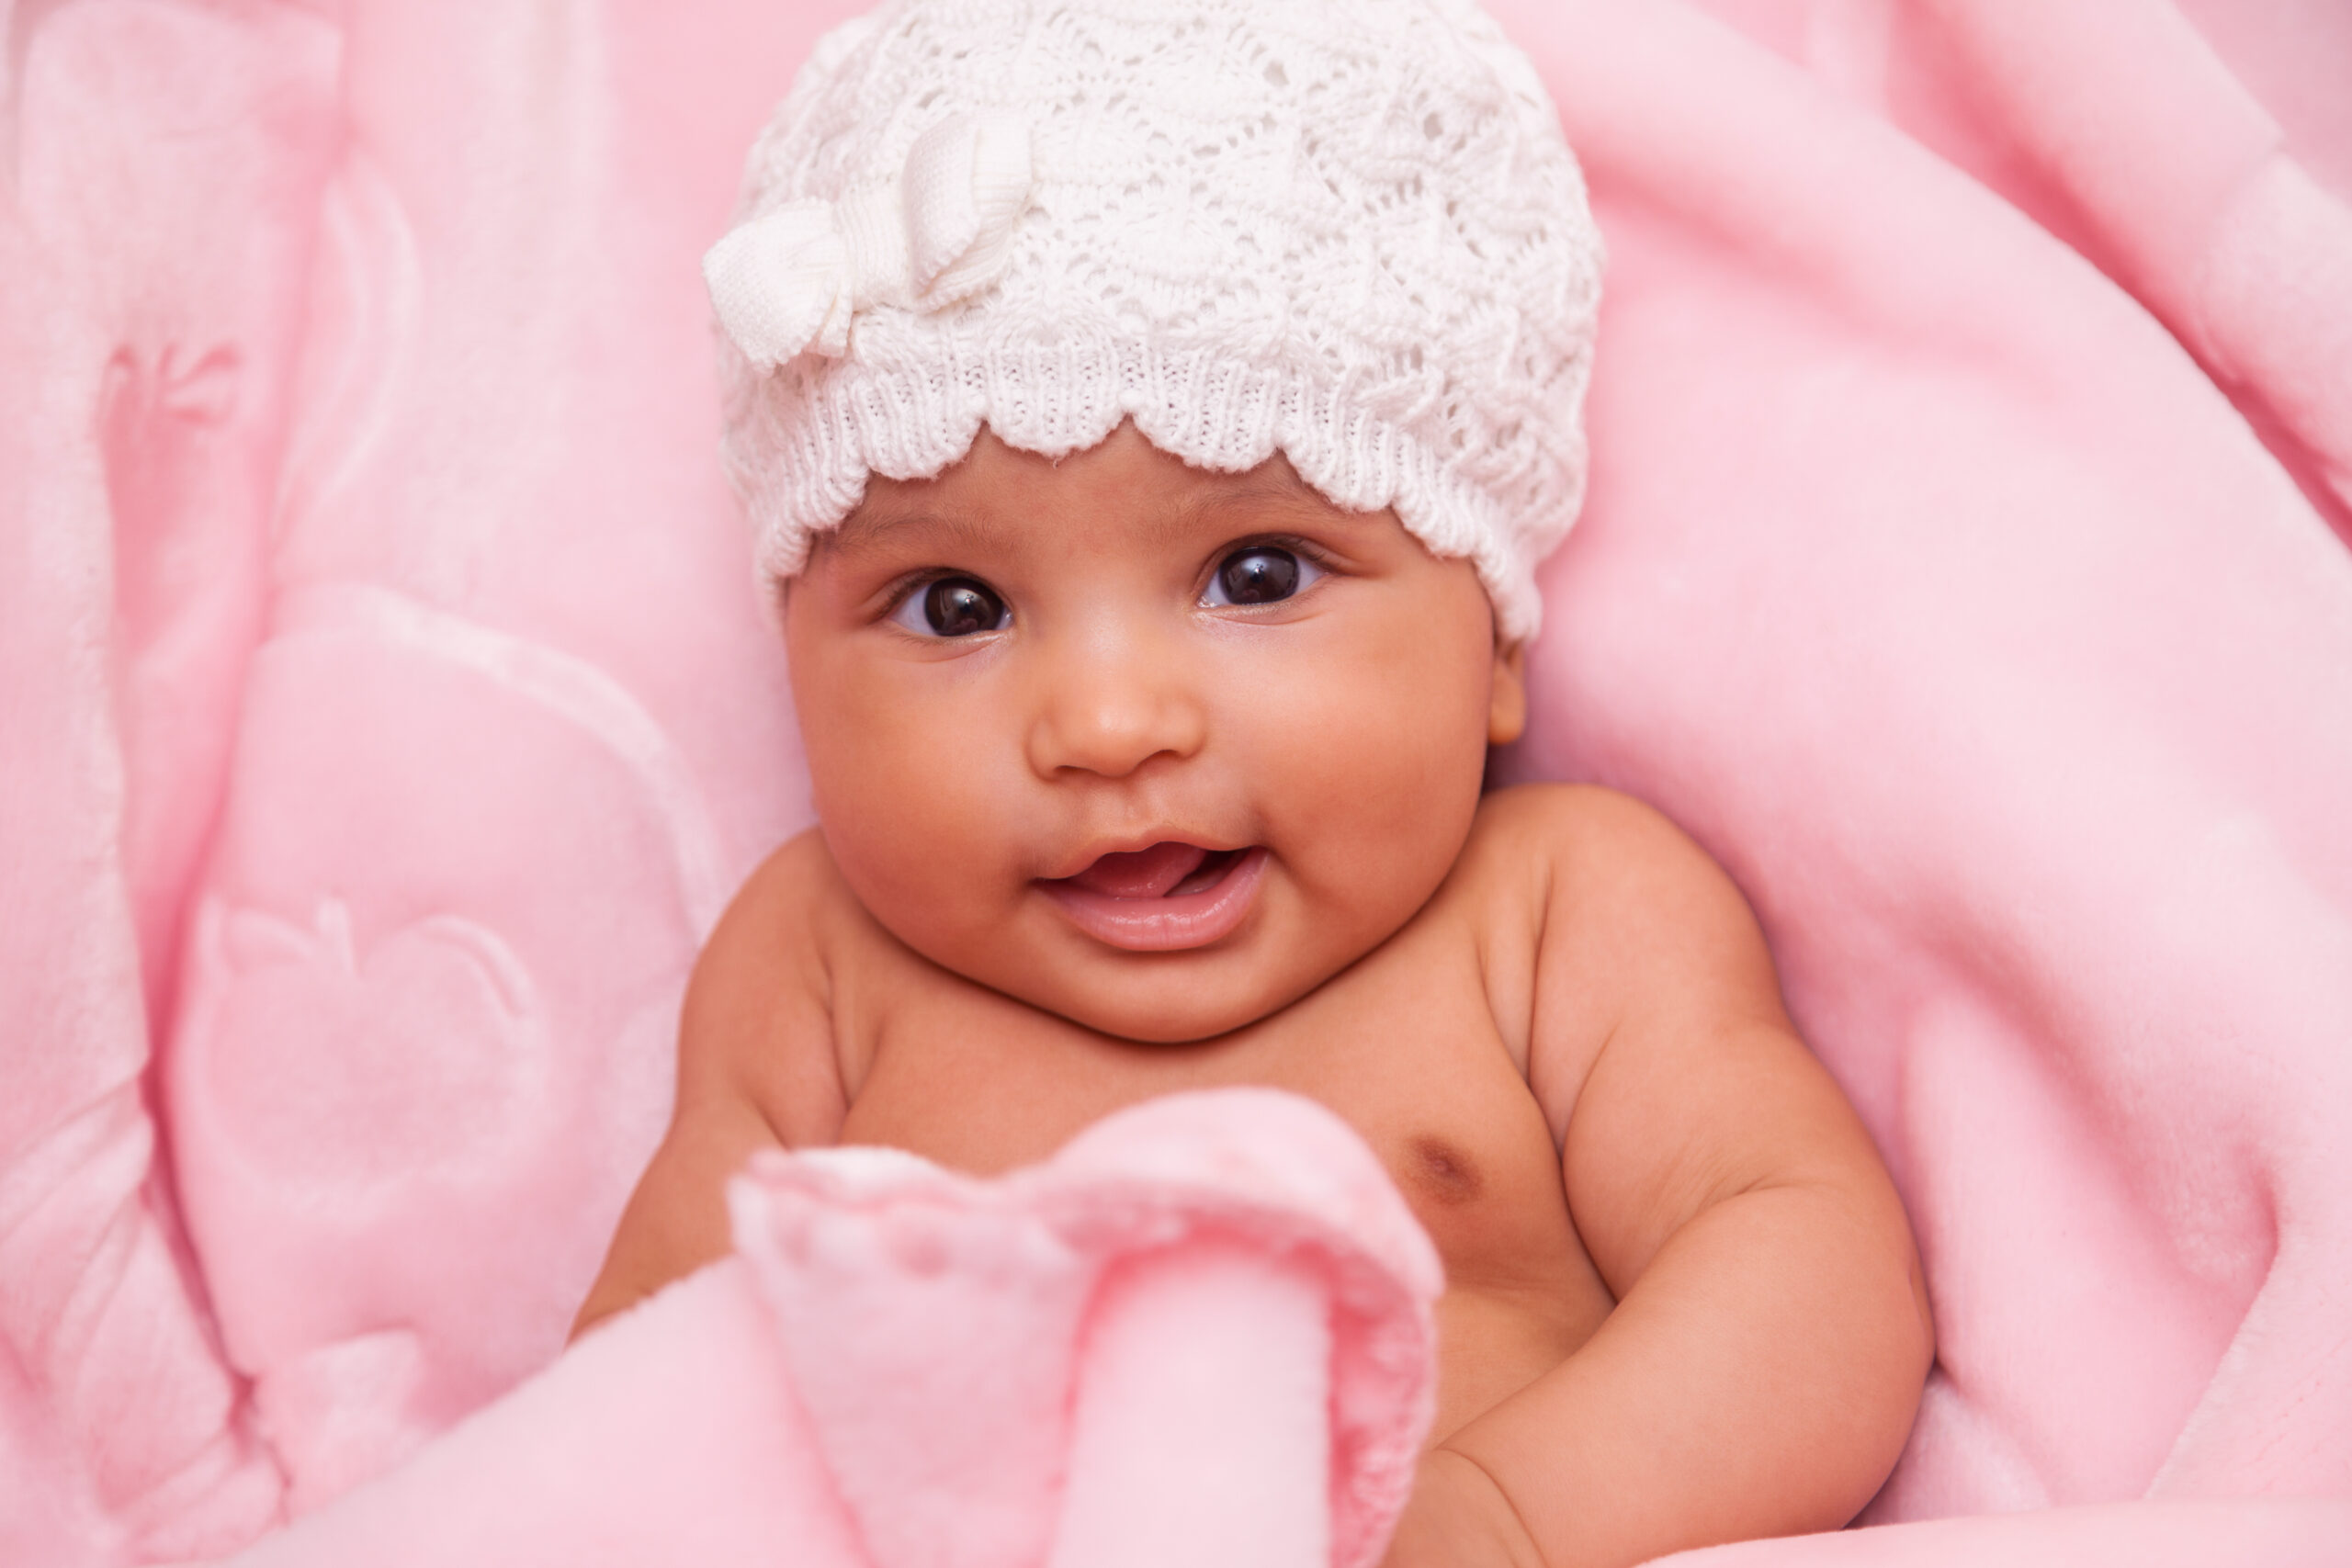 Baby’s developmental milestones between 6 and 9 months of age